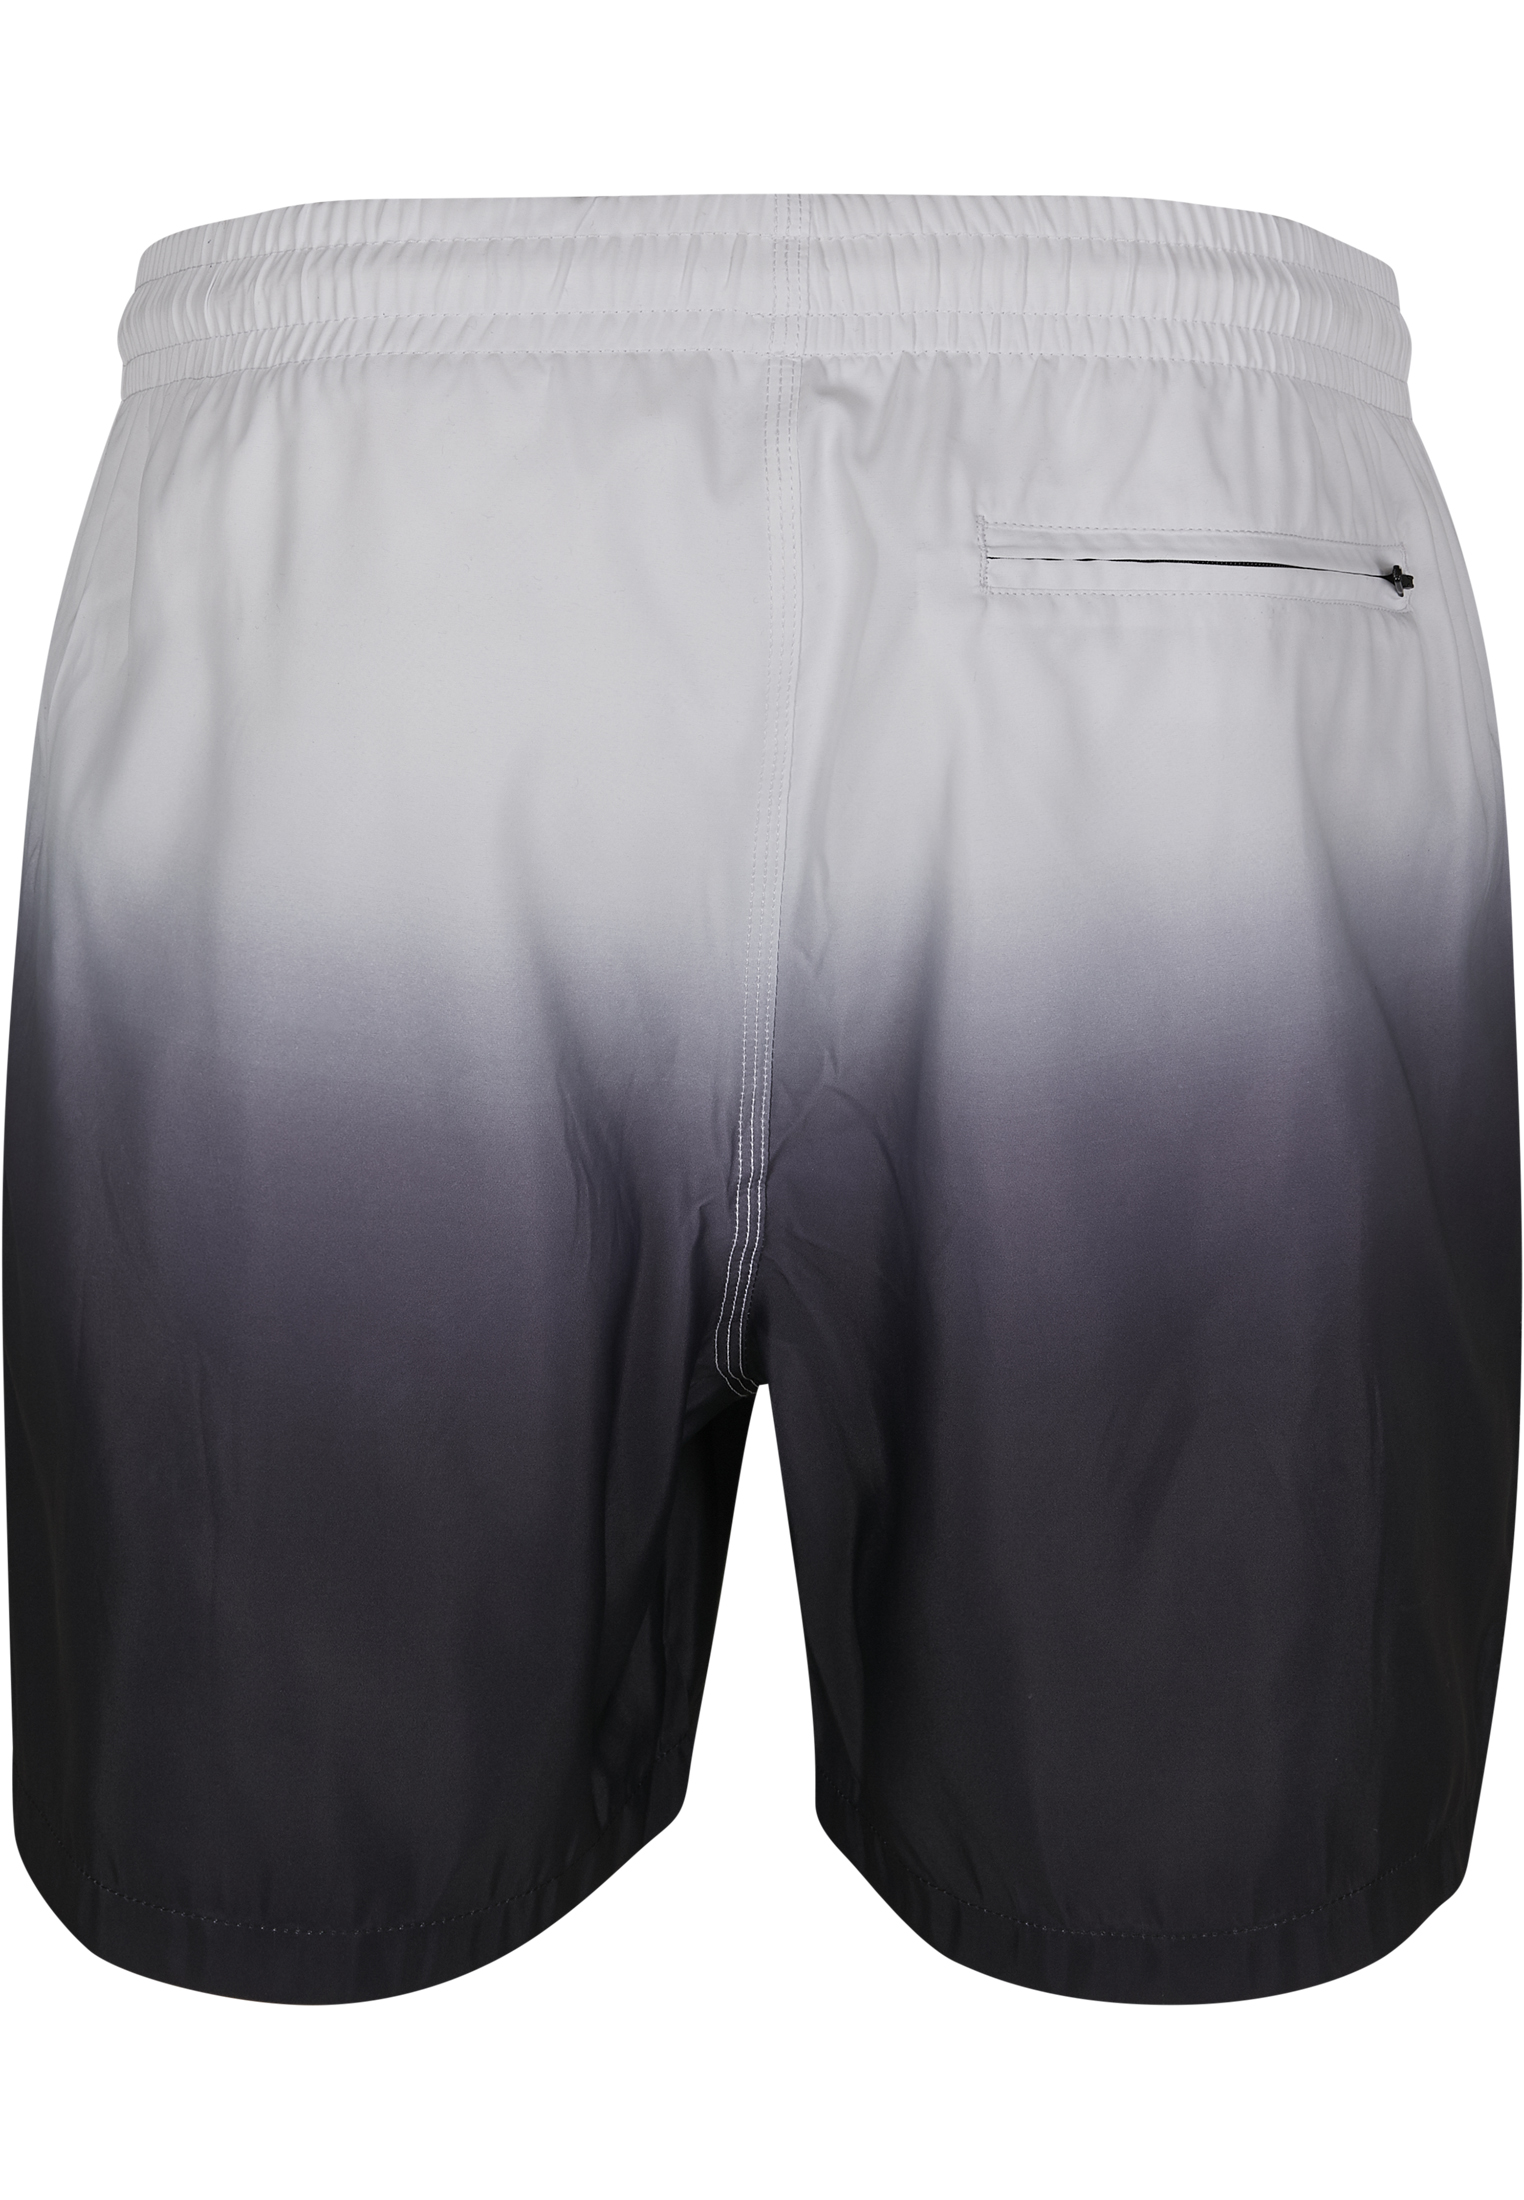 Bademode Dip Dye Swim Shorts in Farbe wht/blk